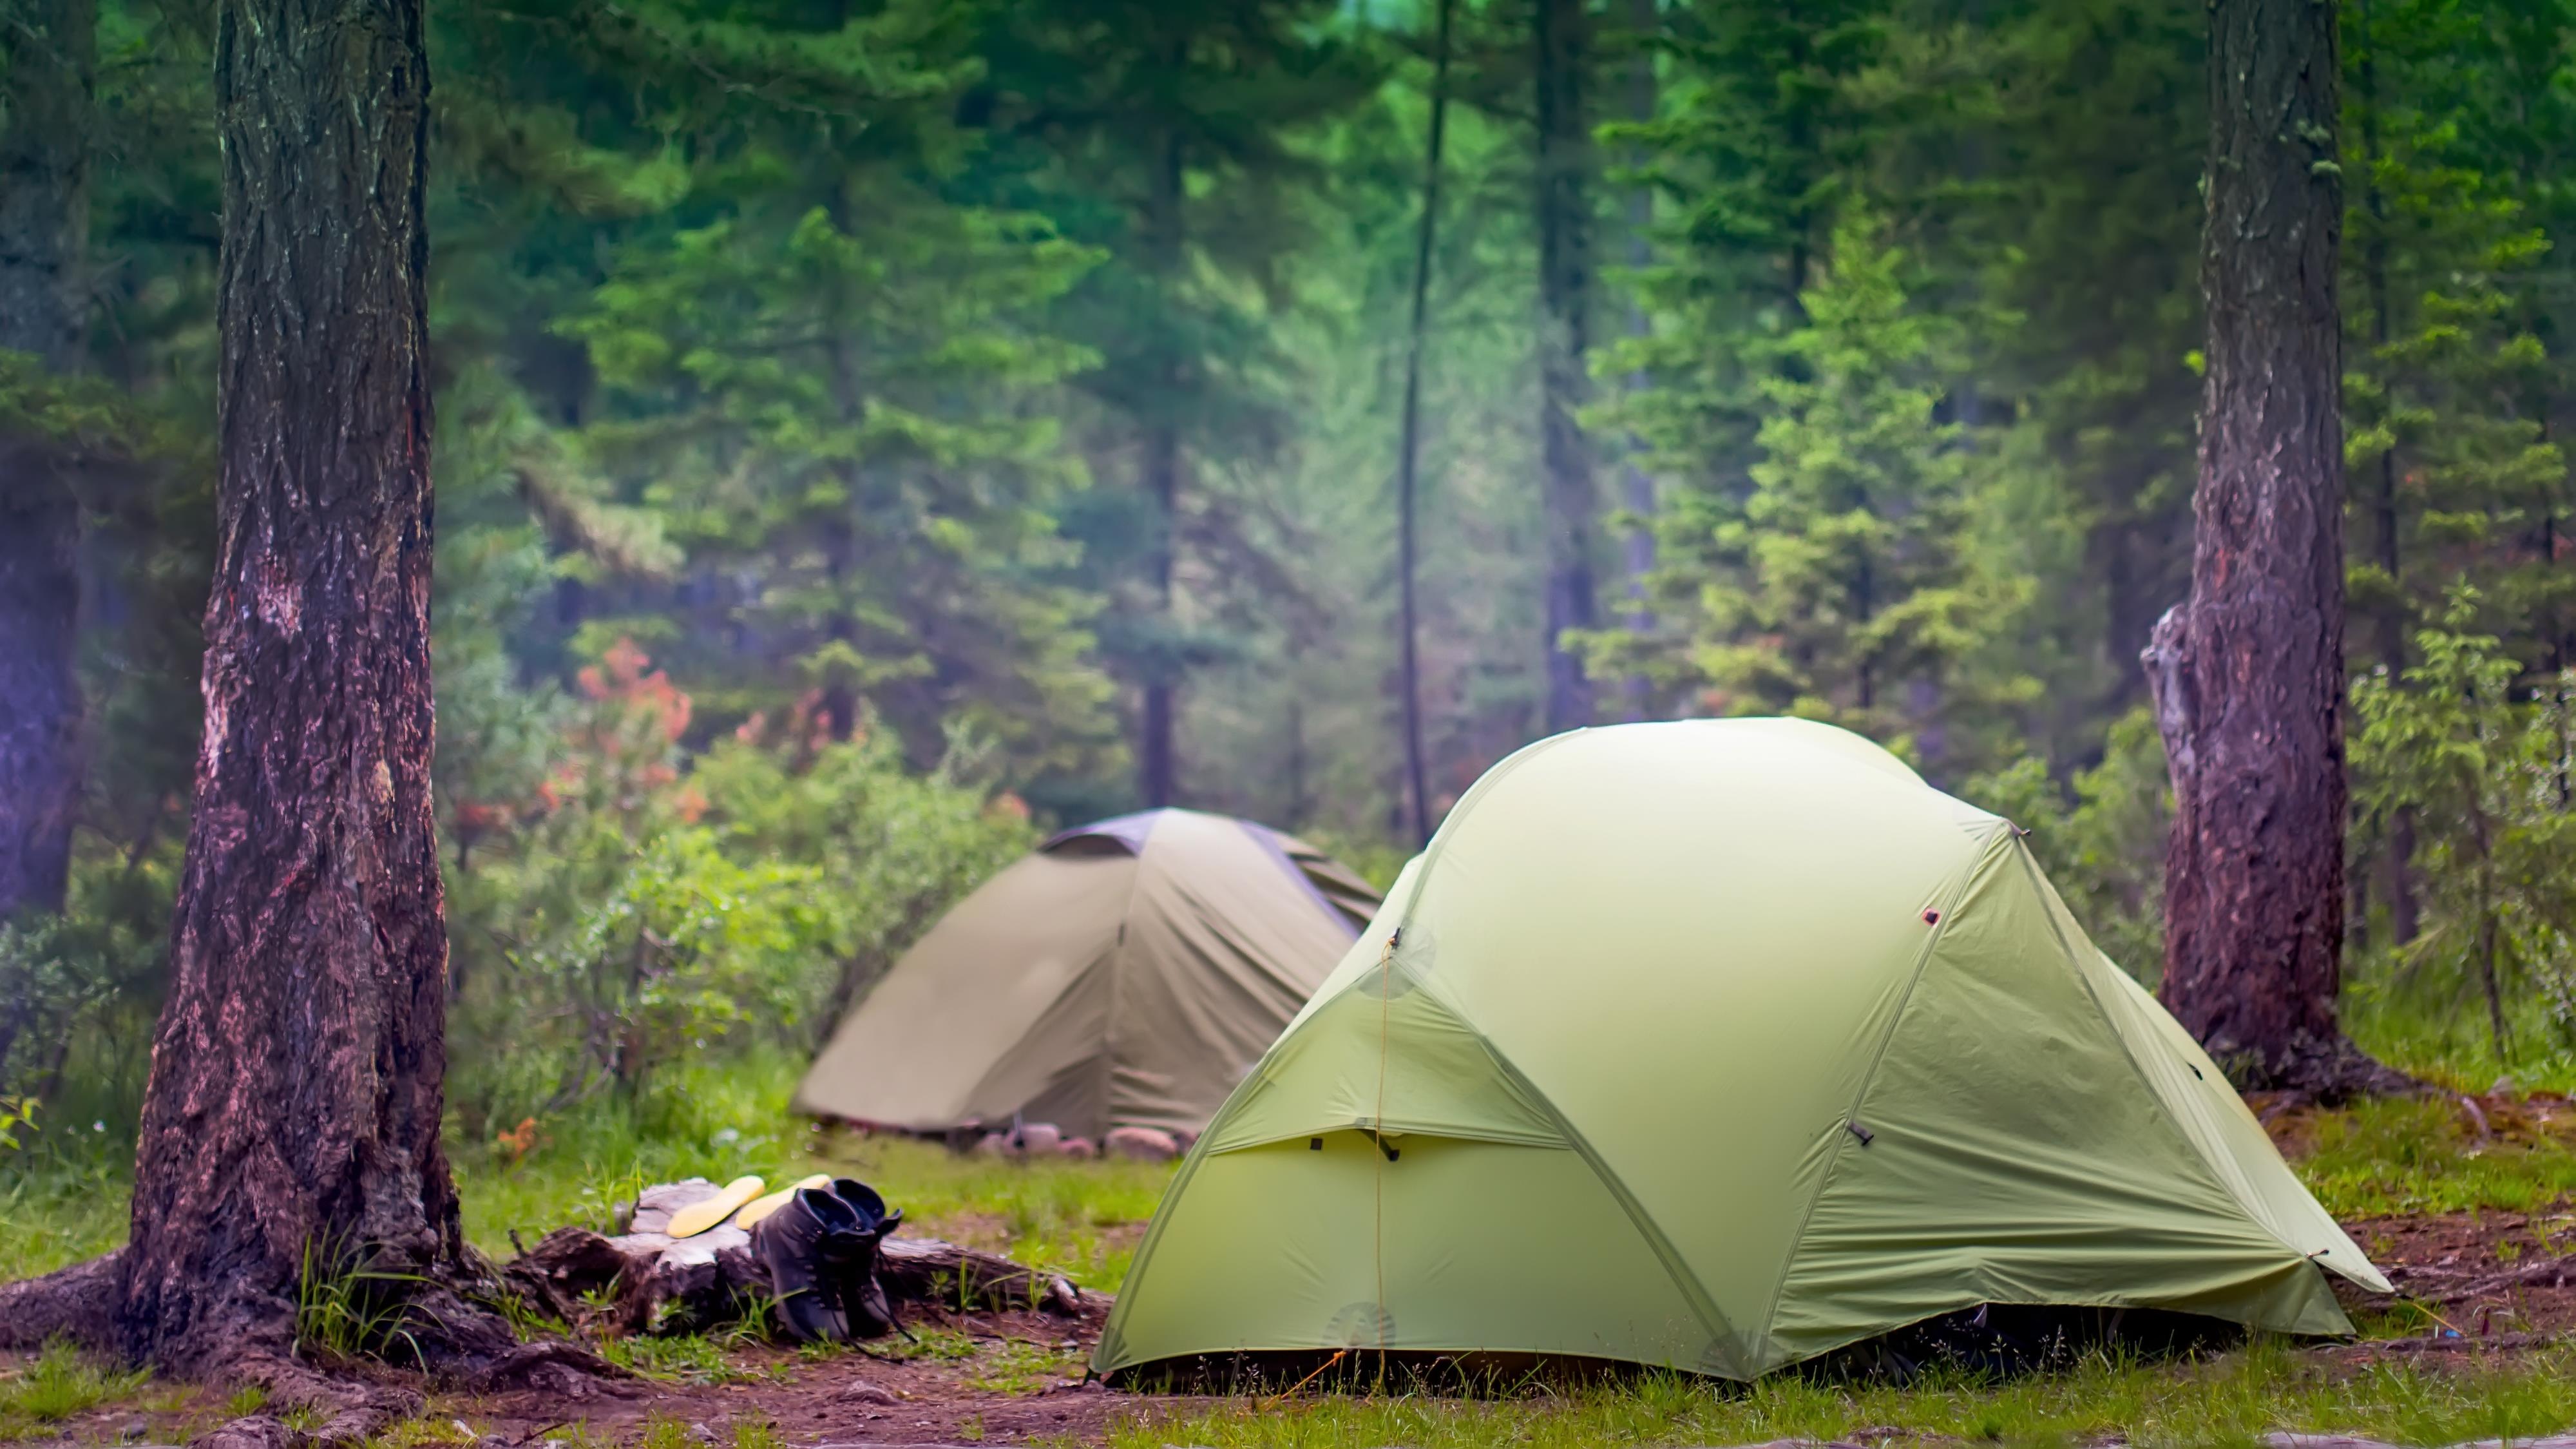 When we go camping. Палатка. Палатка в лесу. Кемпинг. Кемпинг в лесу.